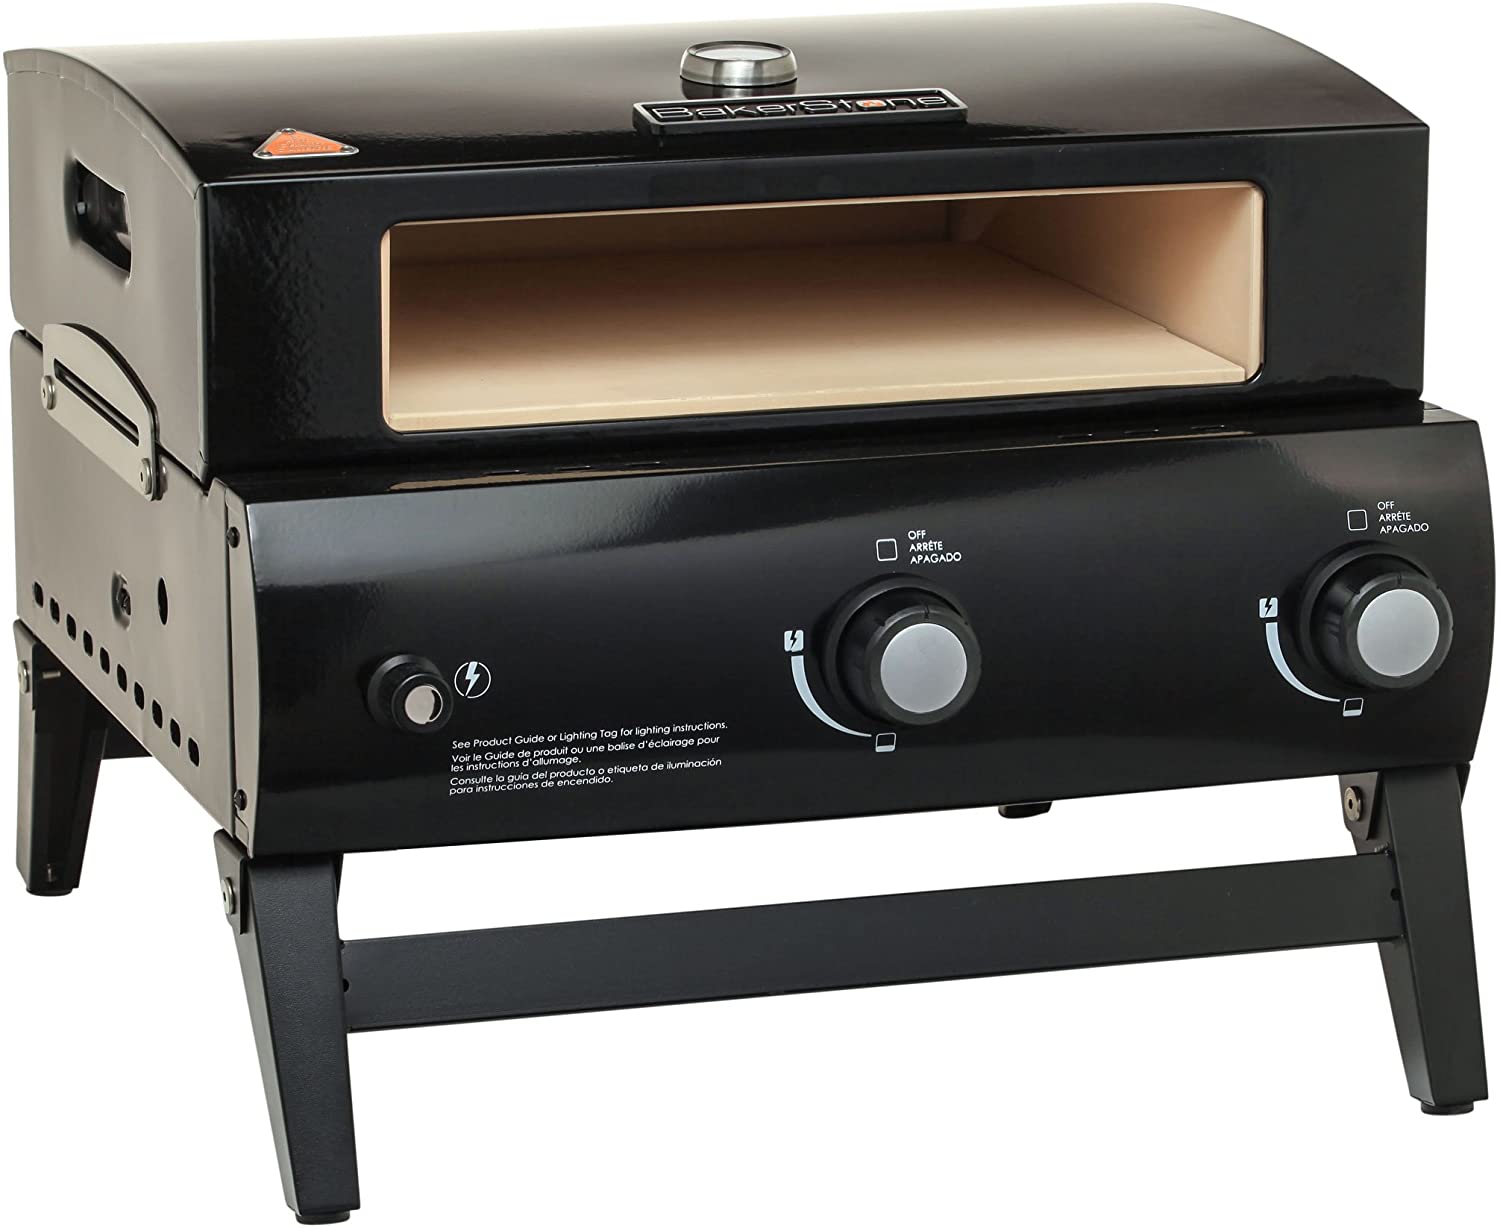 BakerStone 9152403 Portable Gas Pizza Oven, Black